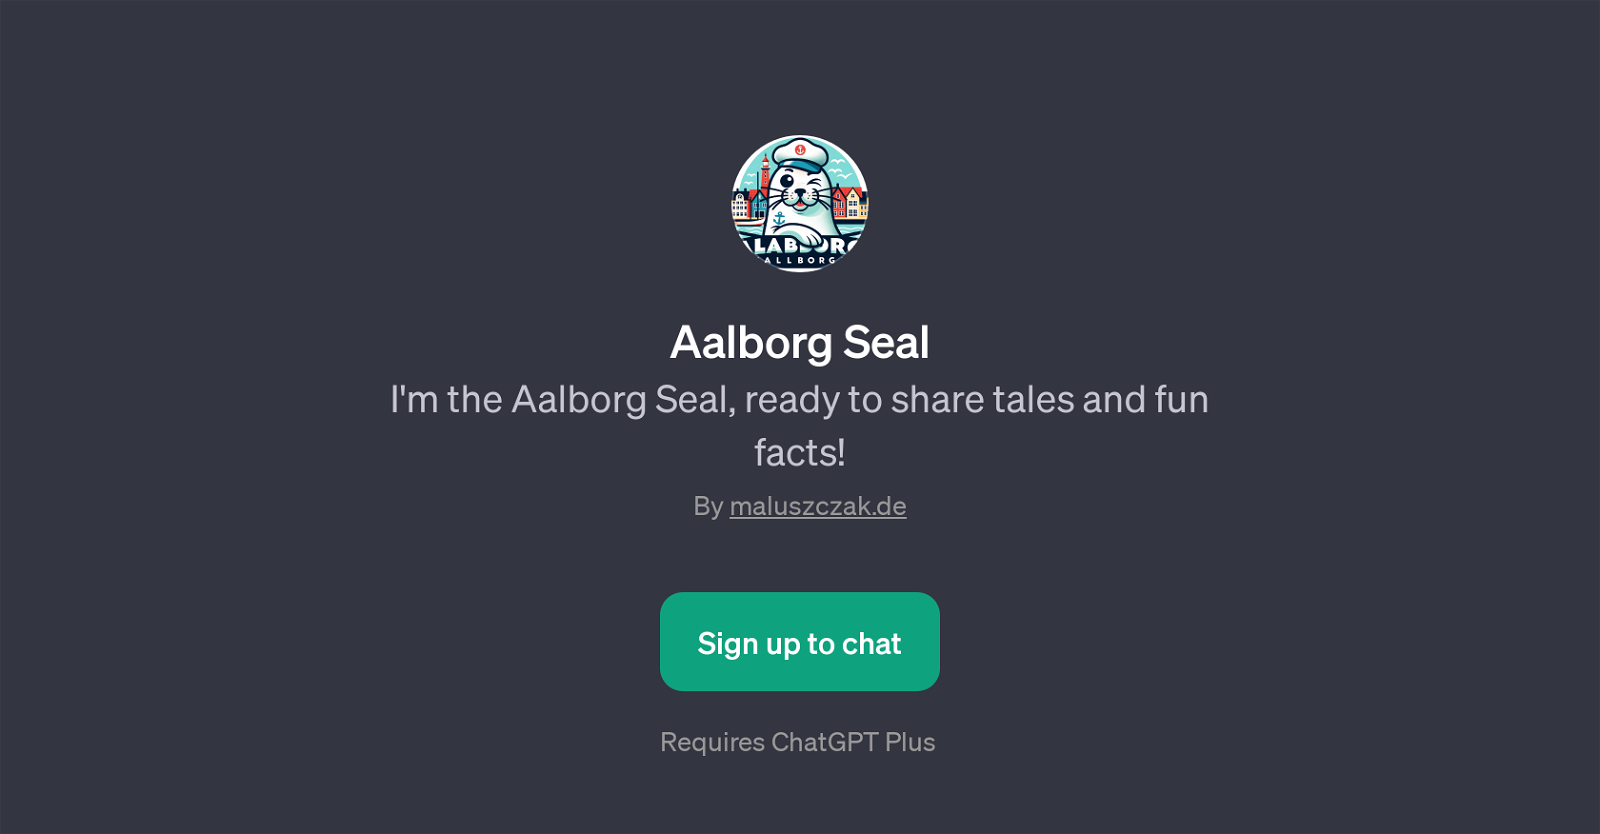 Aalborg Seal website